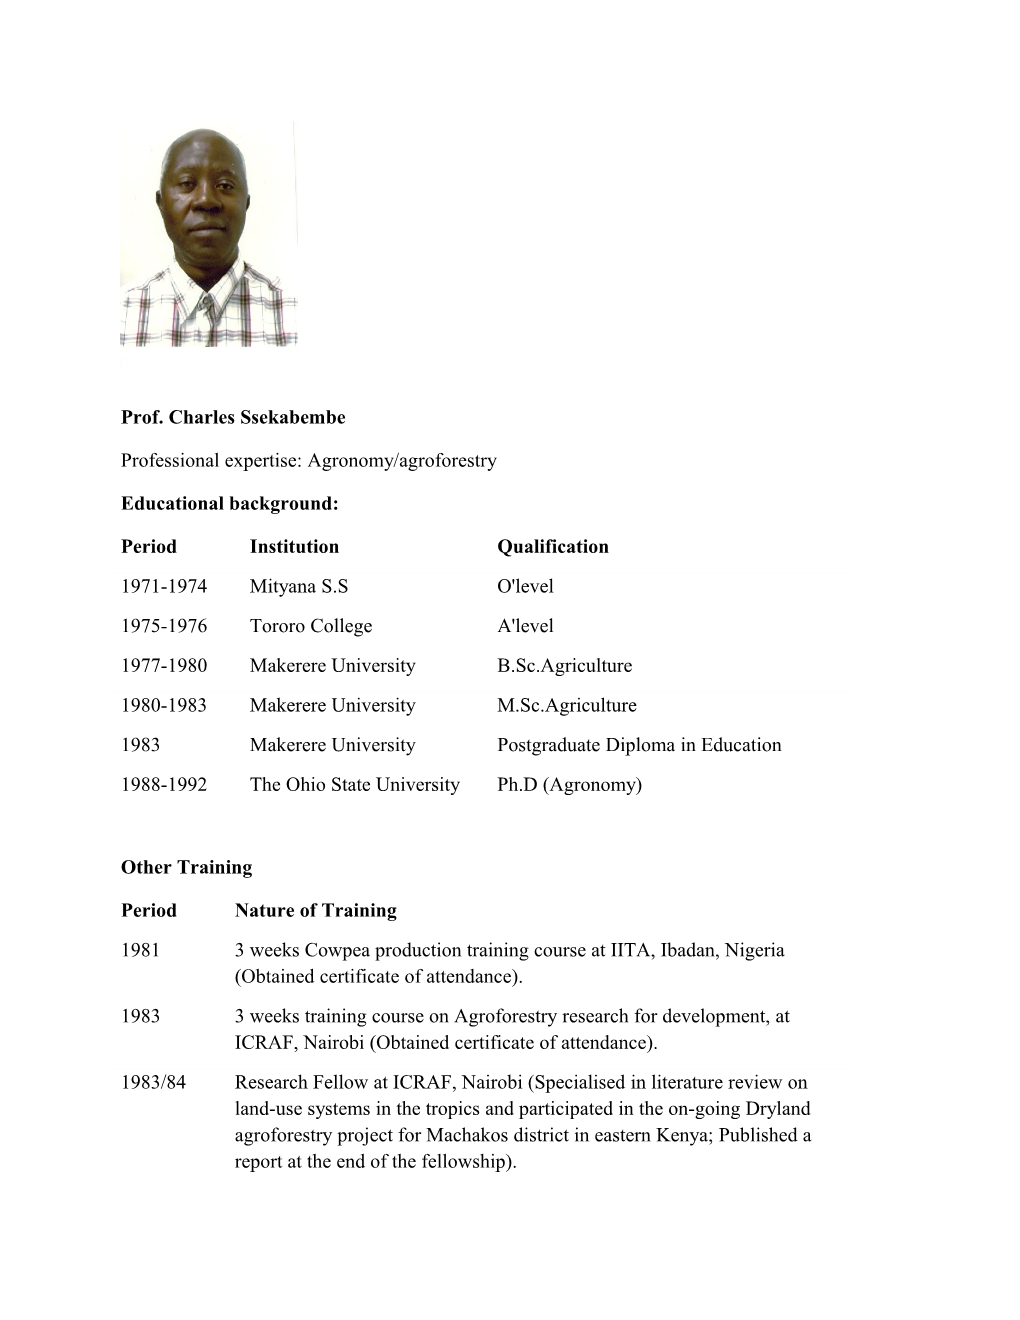 Prof. Charles Ssekabembe